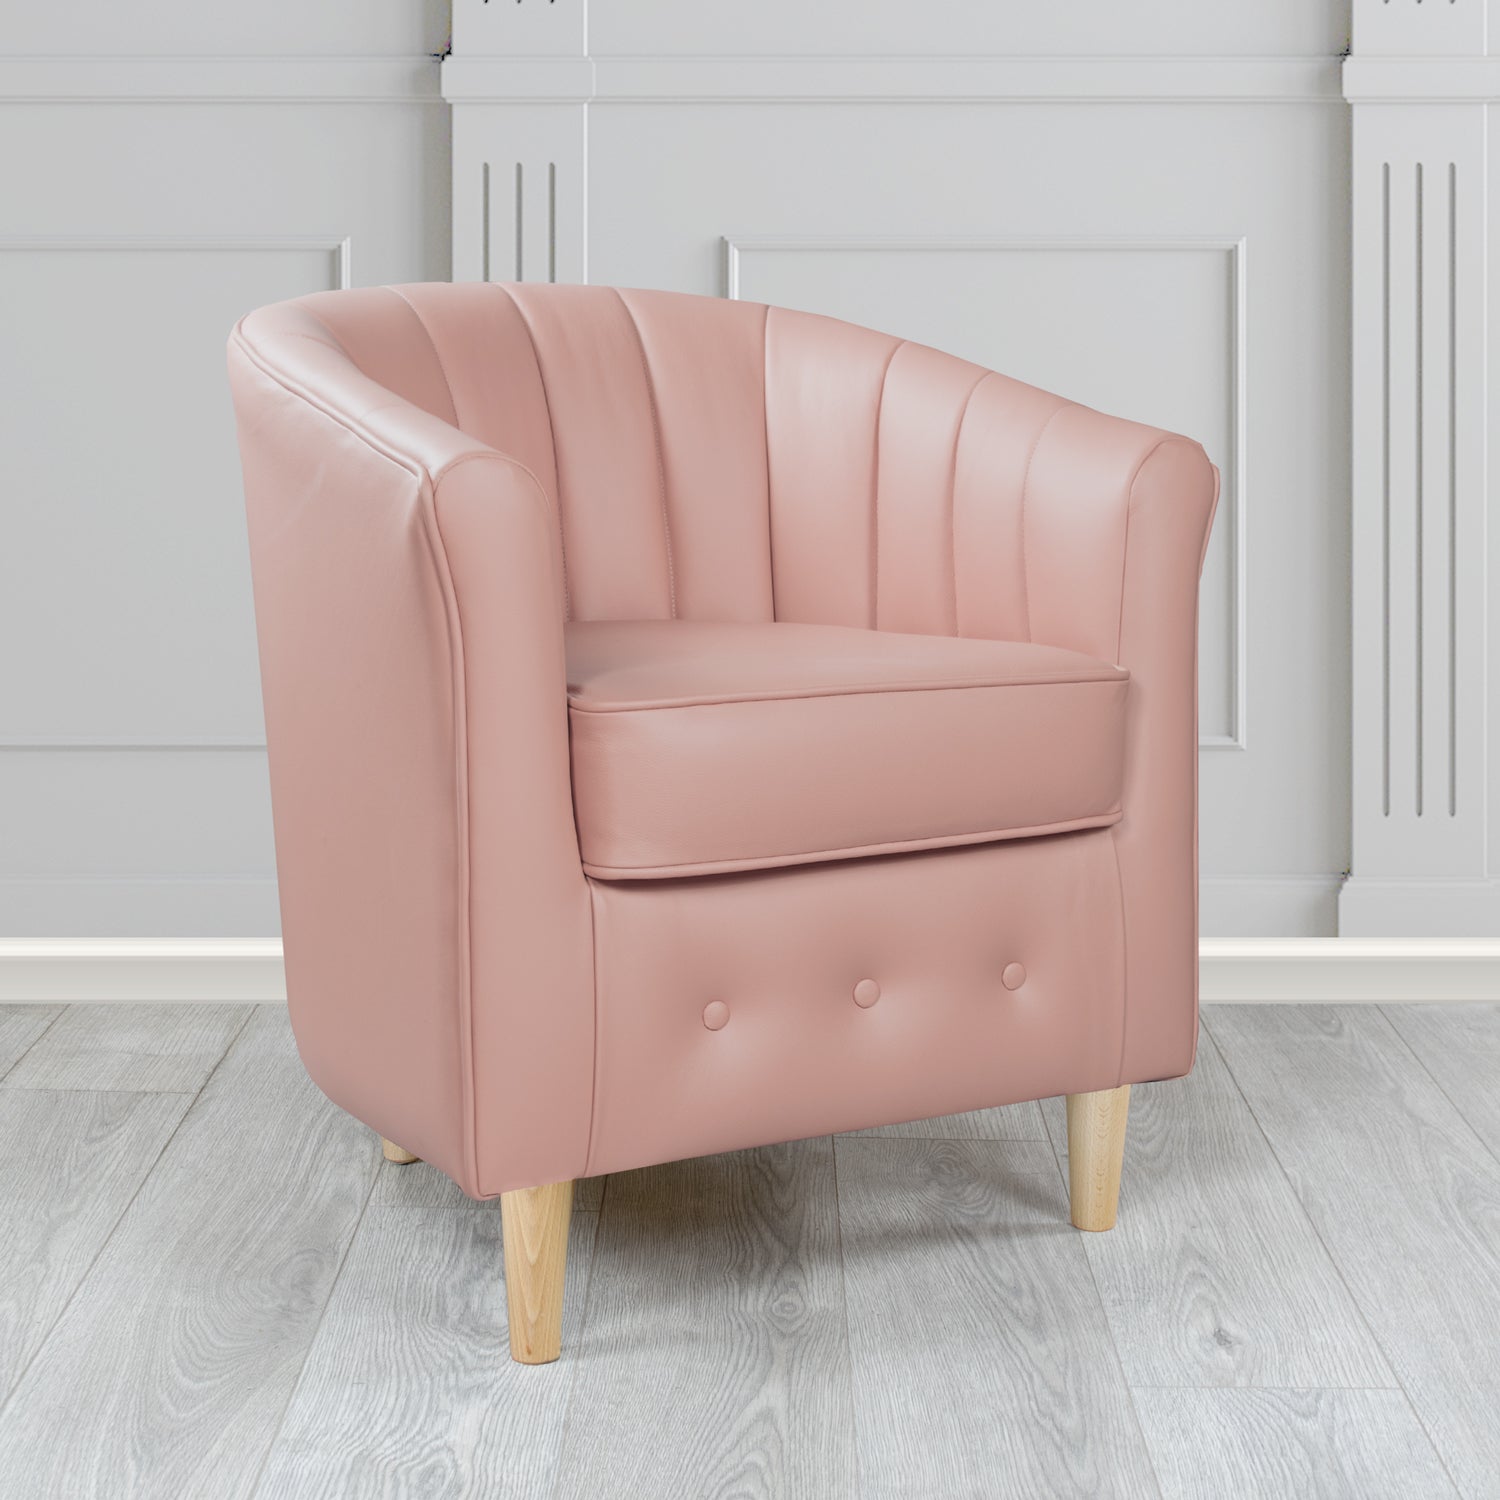 Doha Tub Chair in Vele Visage Crib 5 Genuine Leather